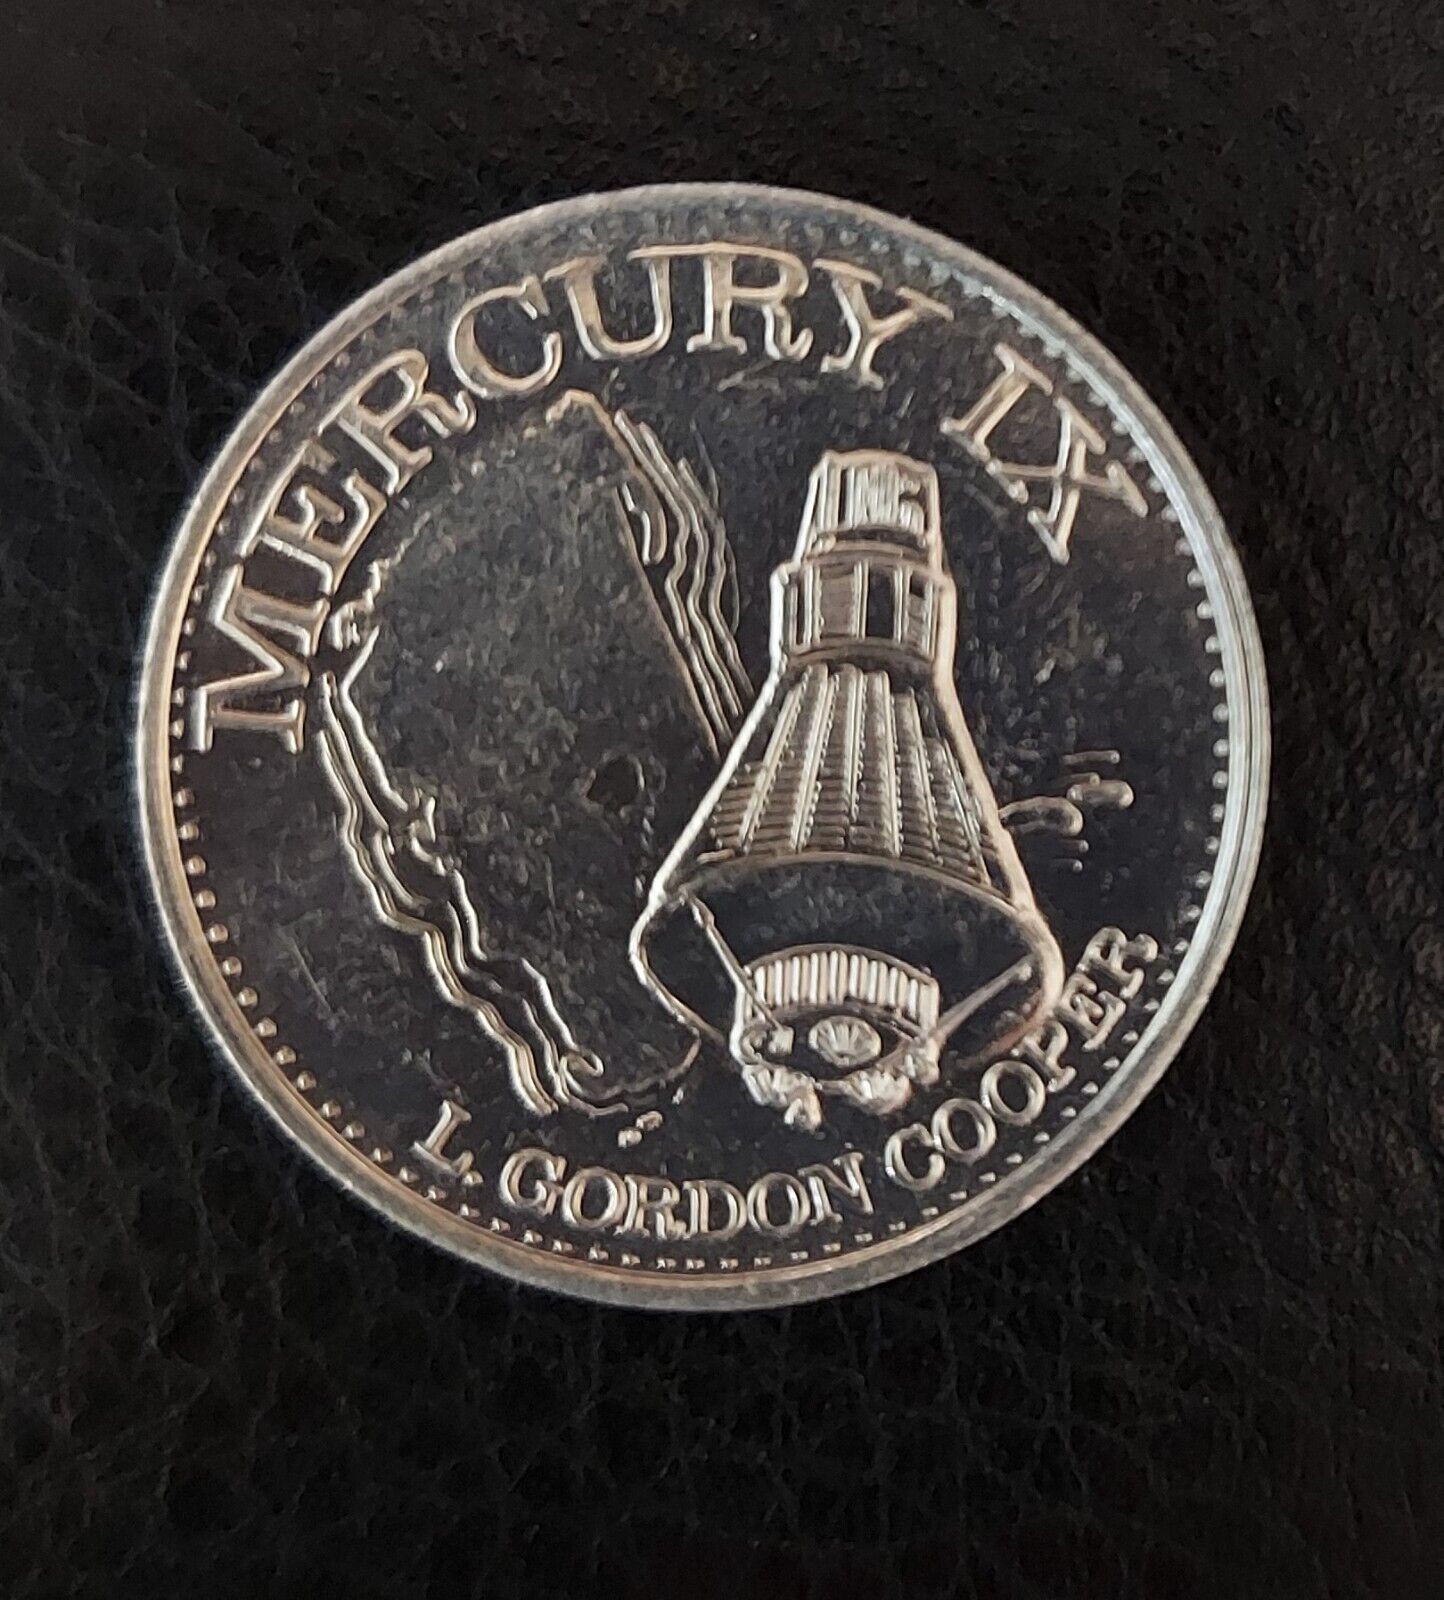 MERCURY IX Mission NASA Vintage Space Program Medallion Medal Challenge Coin